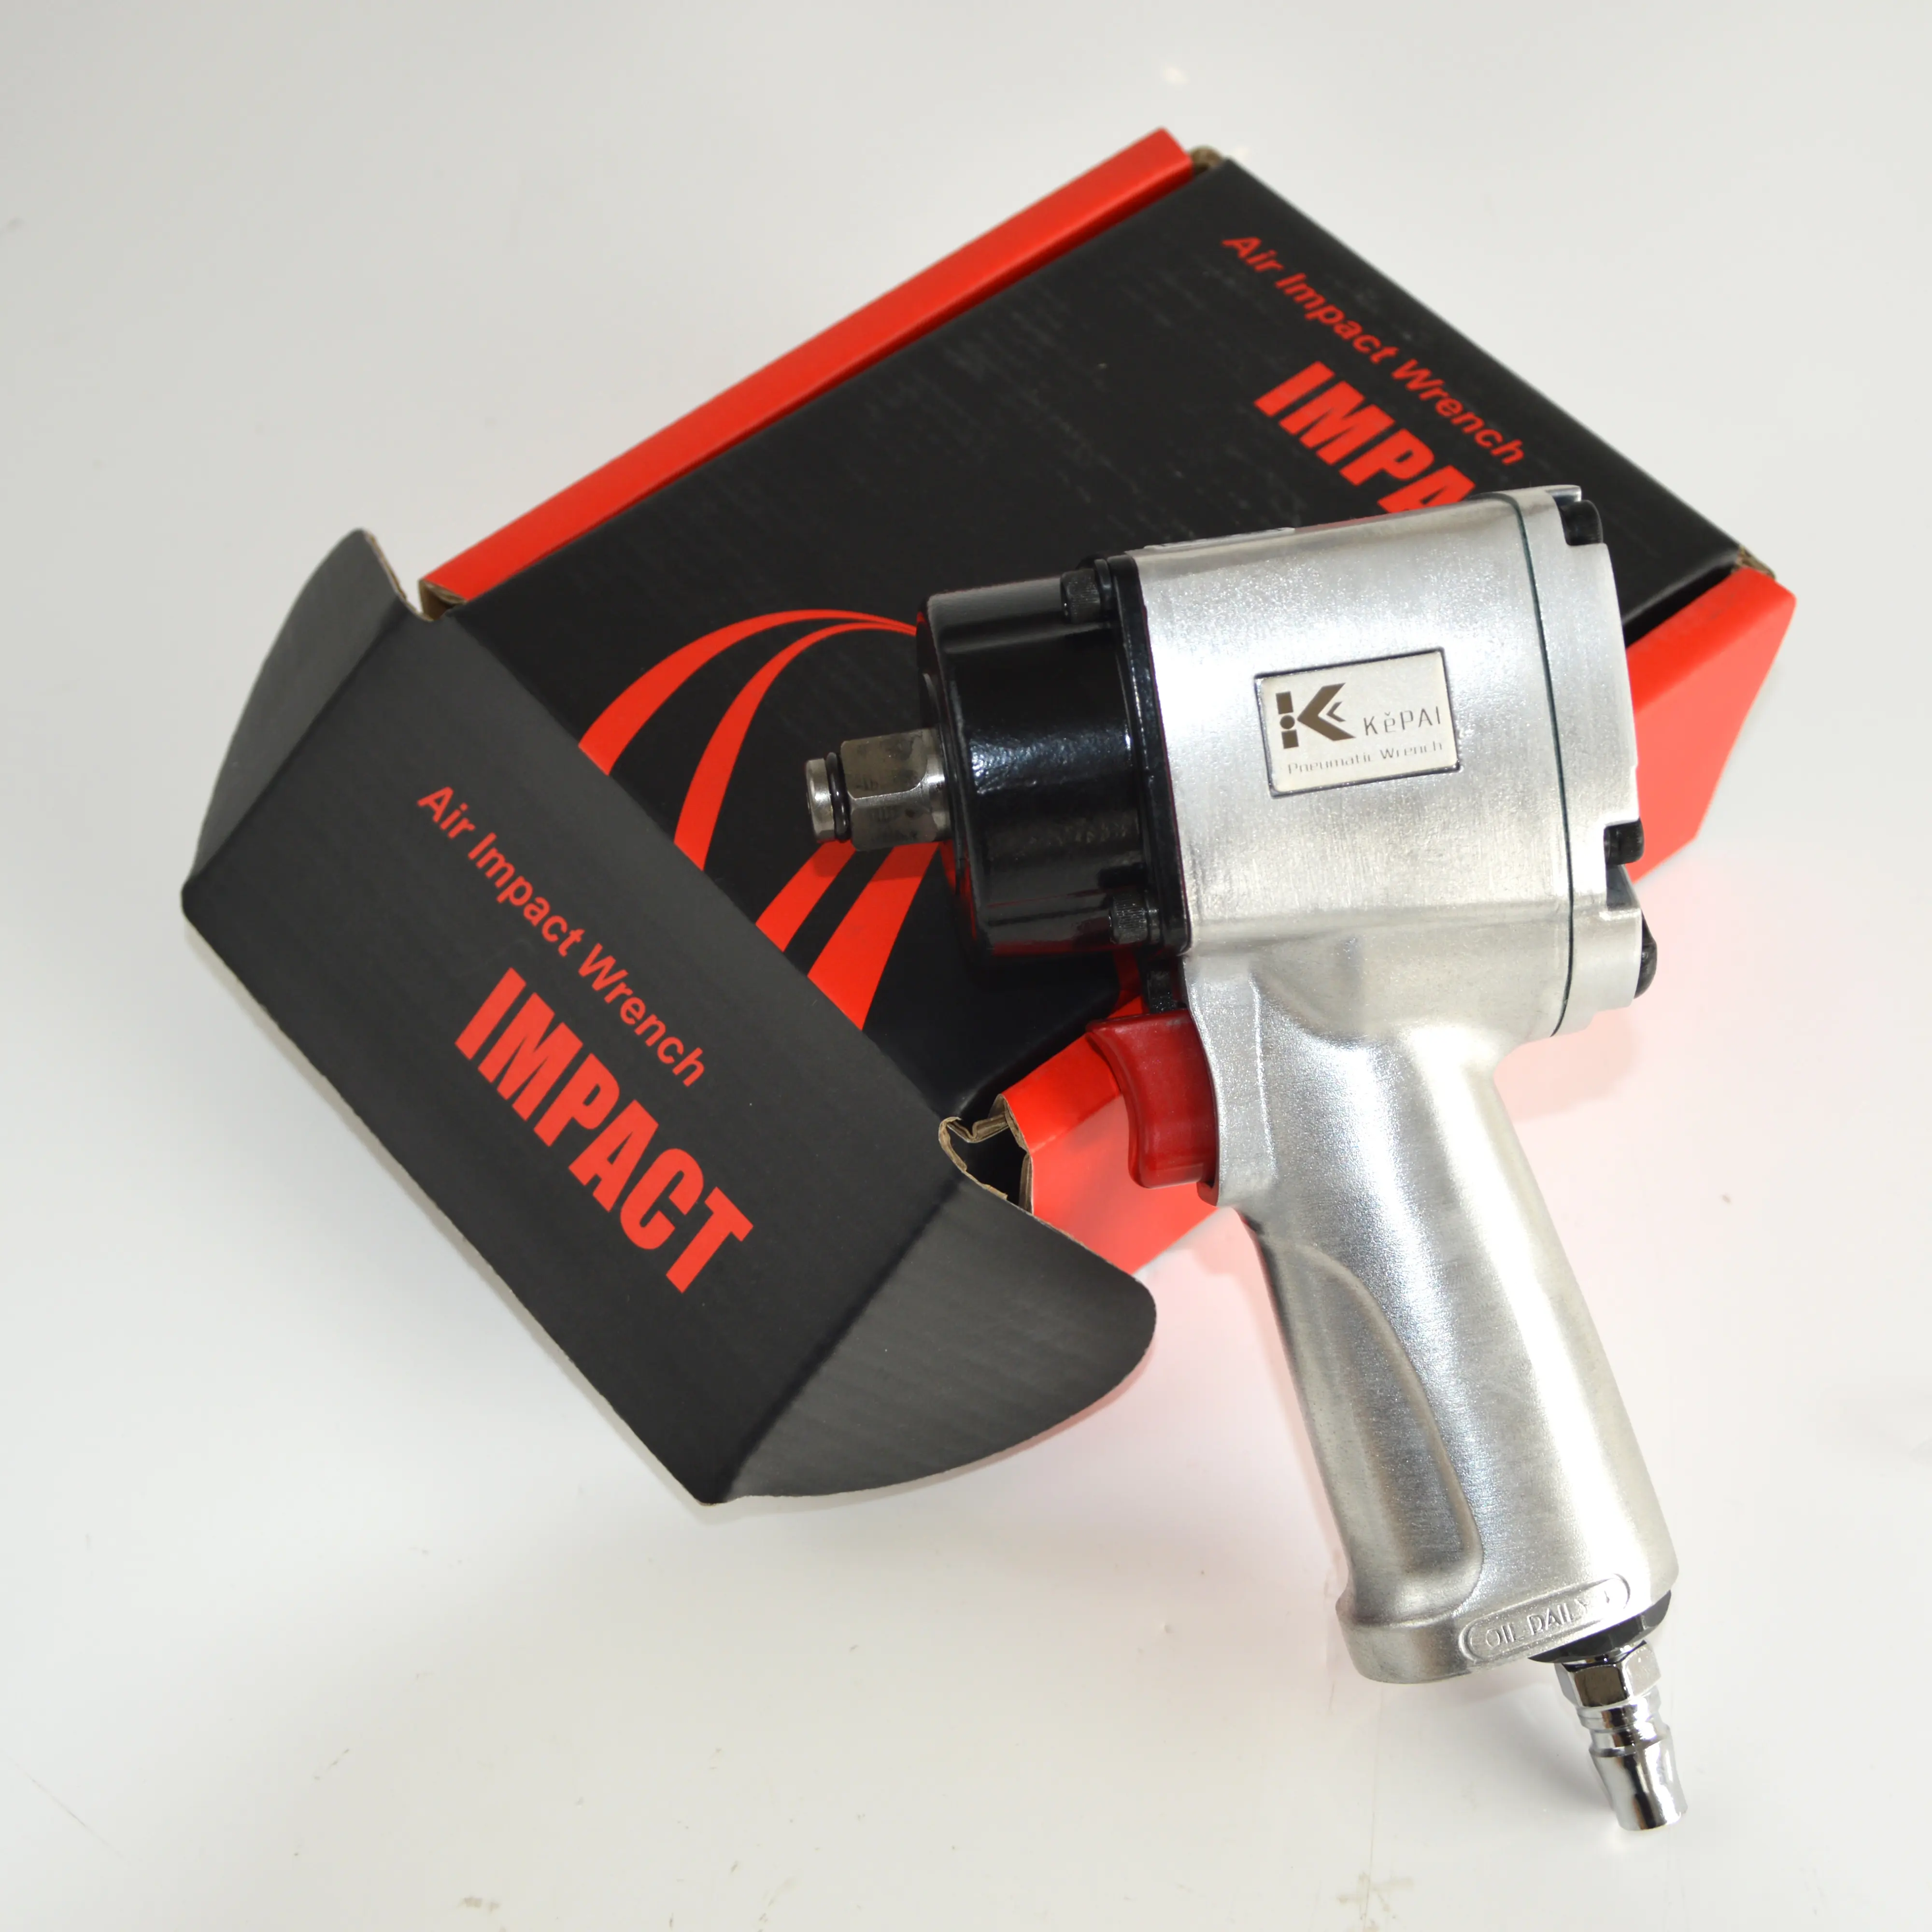 KR-1211PD 1/2 "또는 3/8" 단일 루프 클러치 미니 에어 렌치 도구 산업용 수리 도구 공압 에어 임팩트 렌치